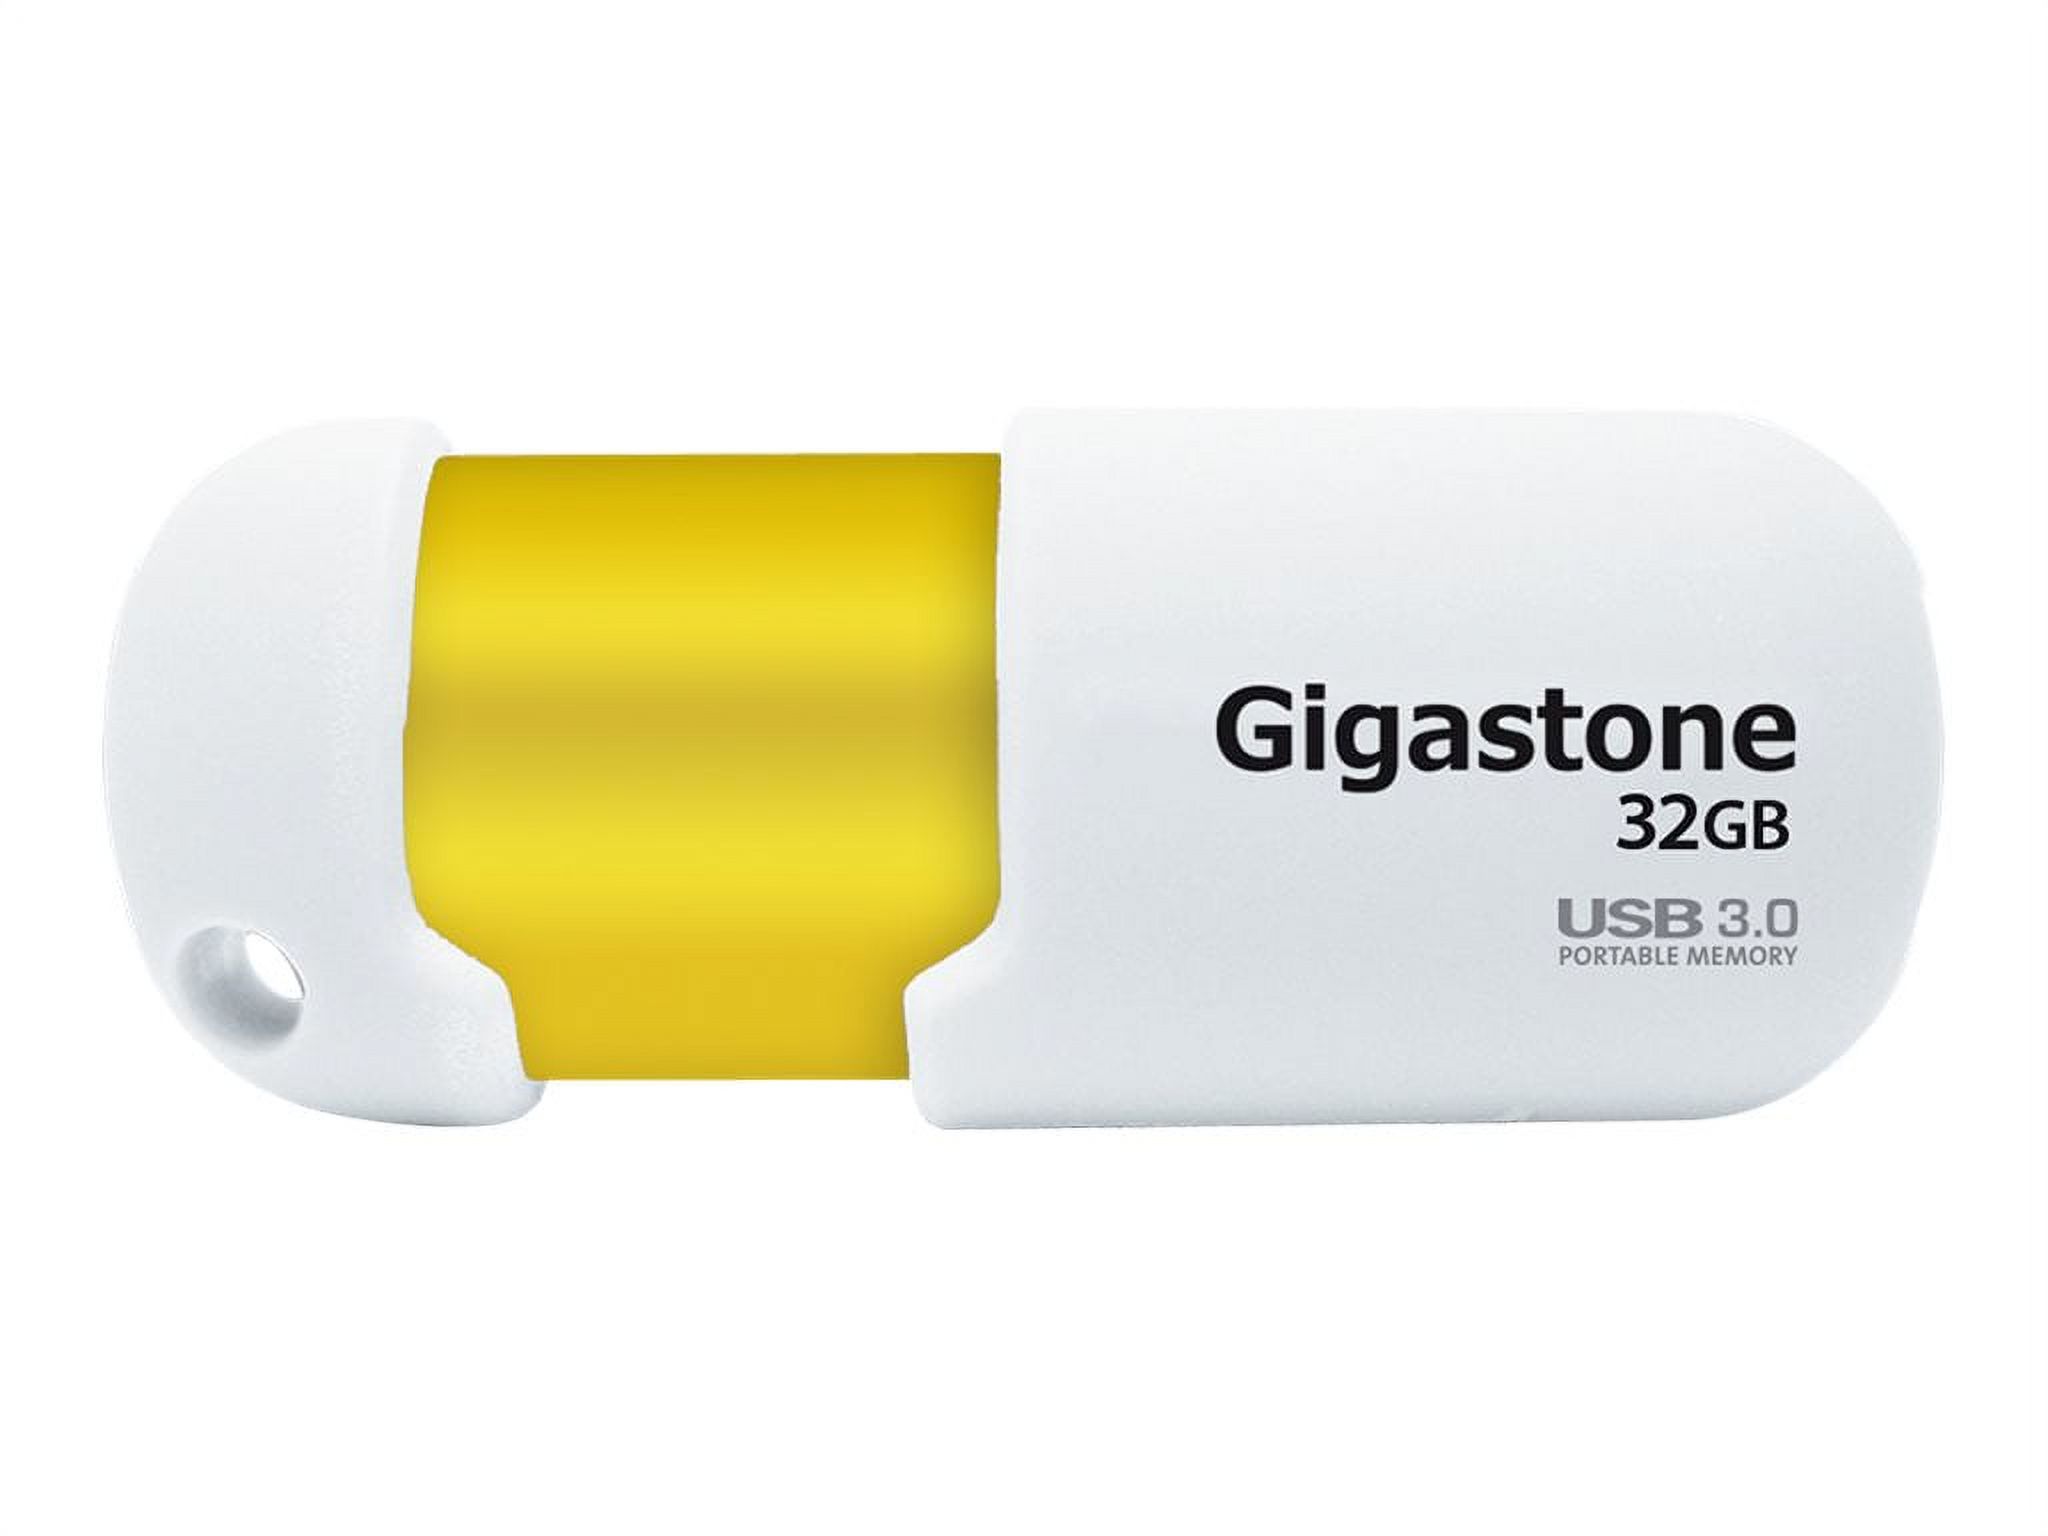 Gigastone - USB flash drive - 32 GB - USB 3.0 - white, gold - image 1 of 2